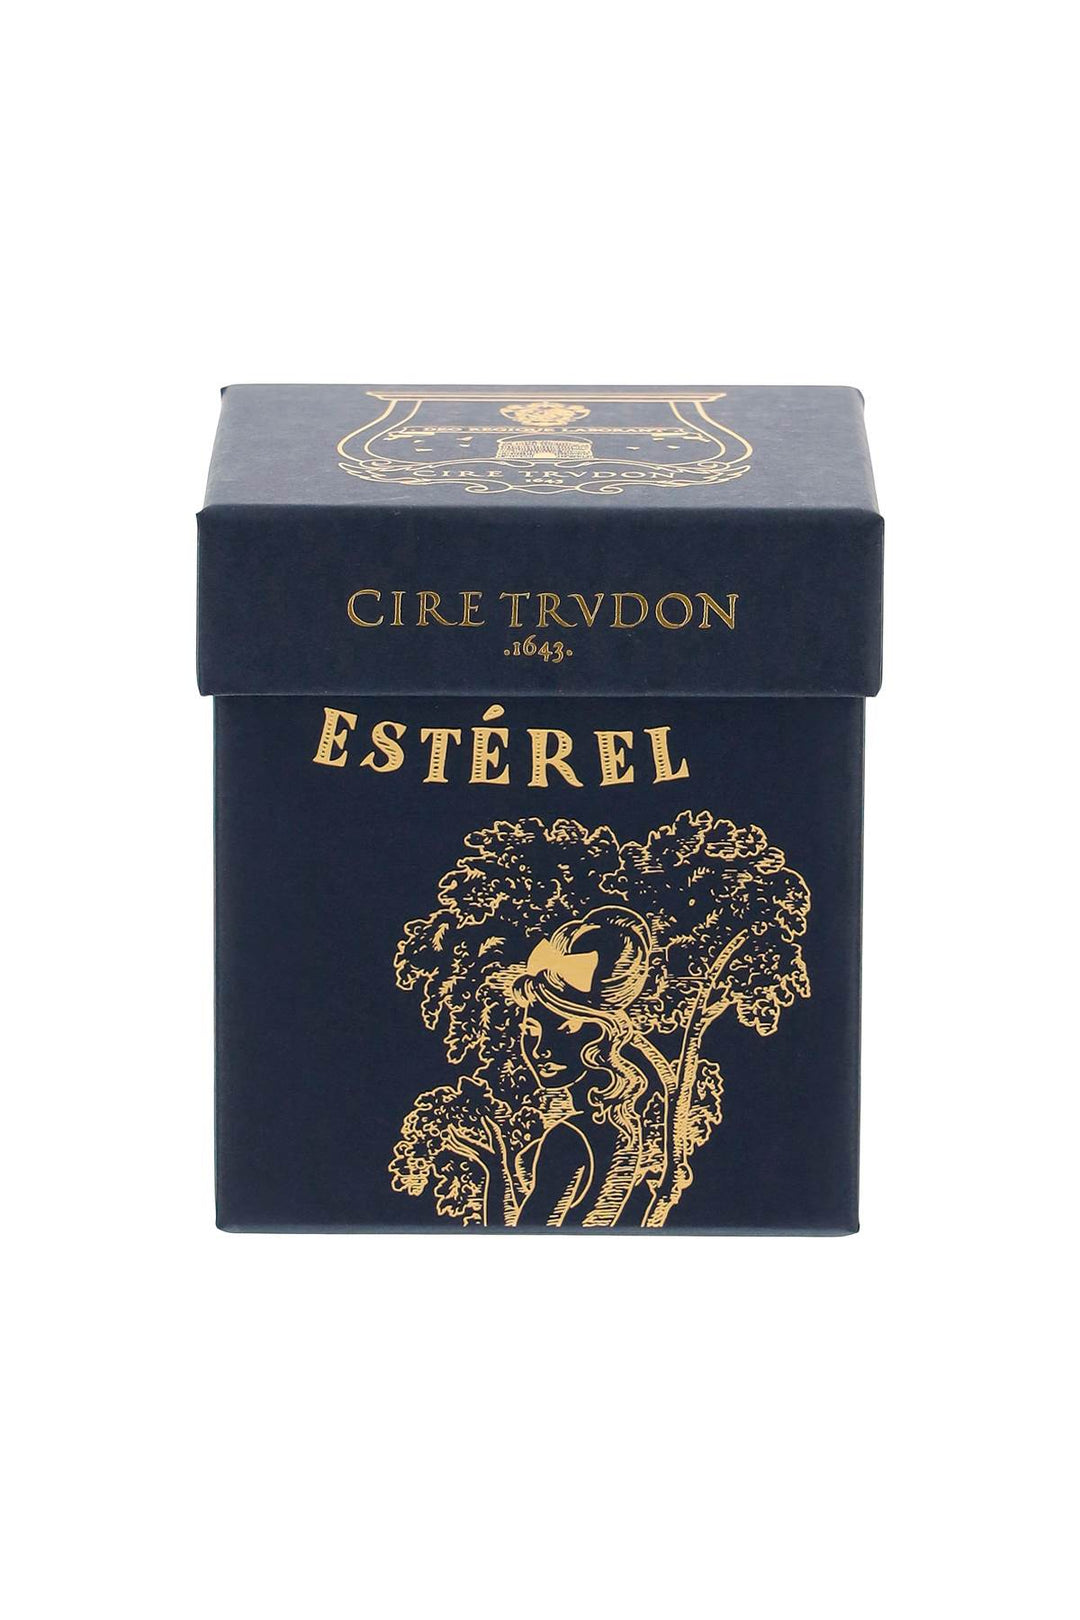 Cire trvdon 'estérel' scented candle - 270 g-1